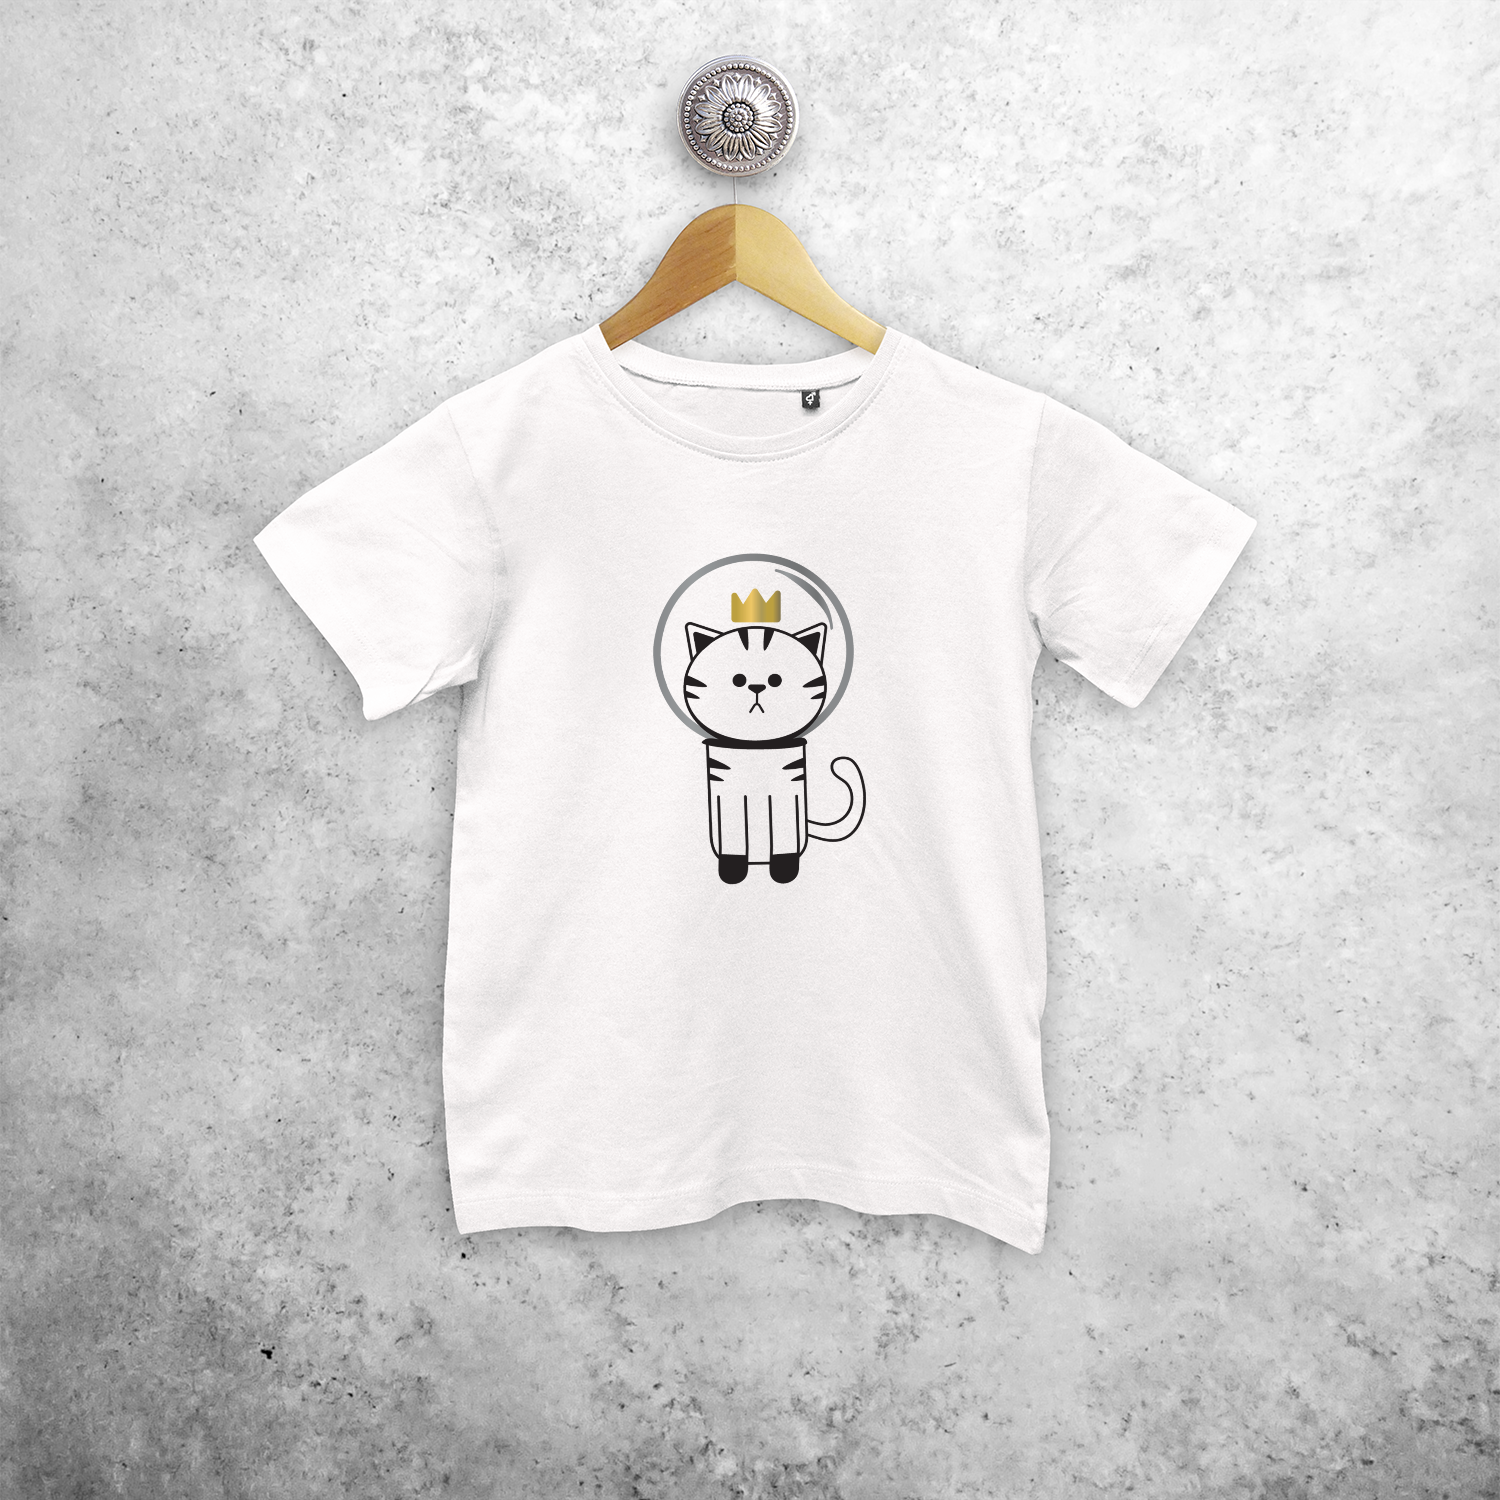 Space cat kids shortsleeve shirt